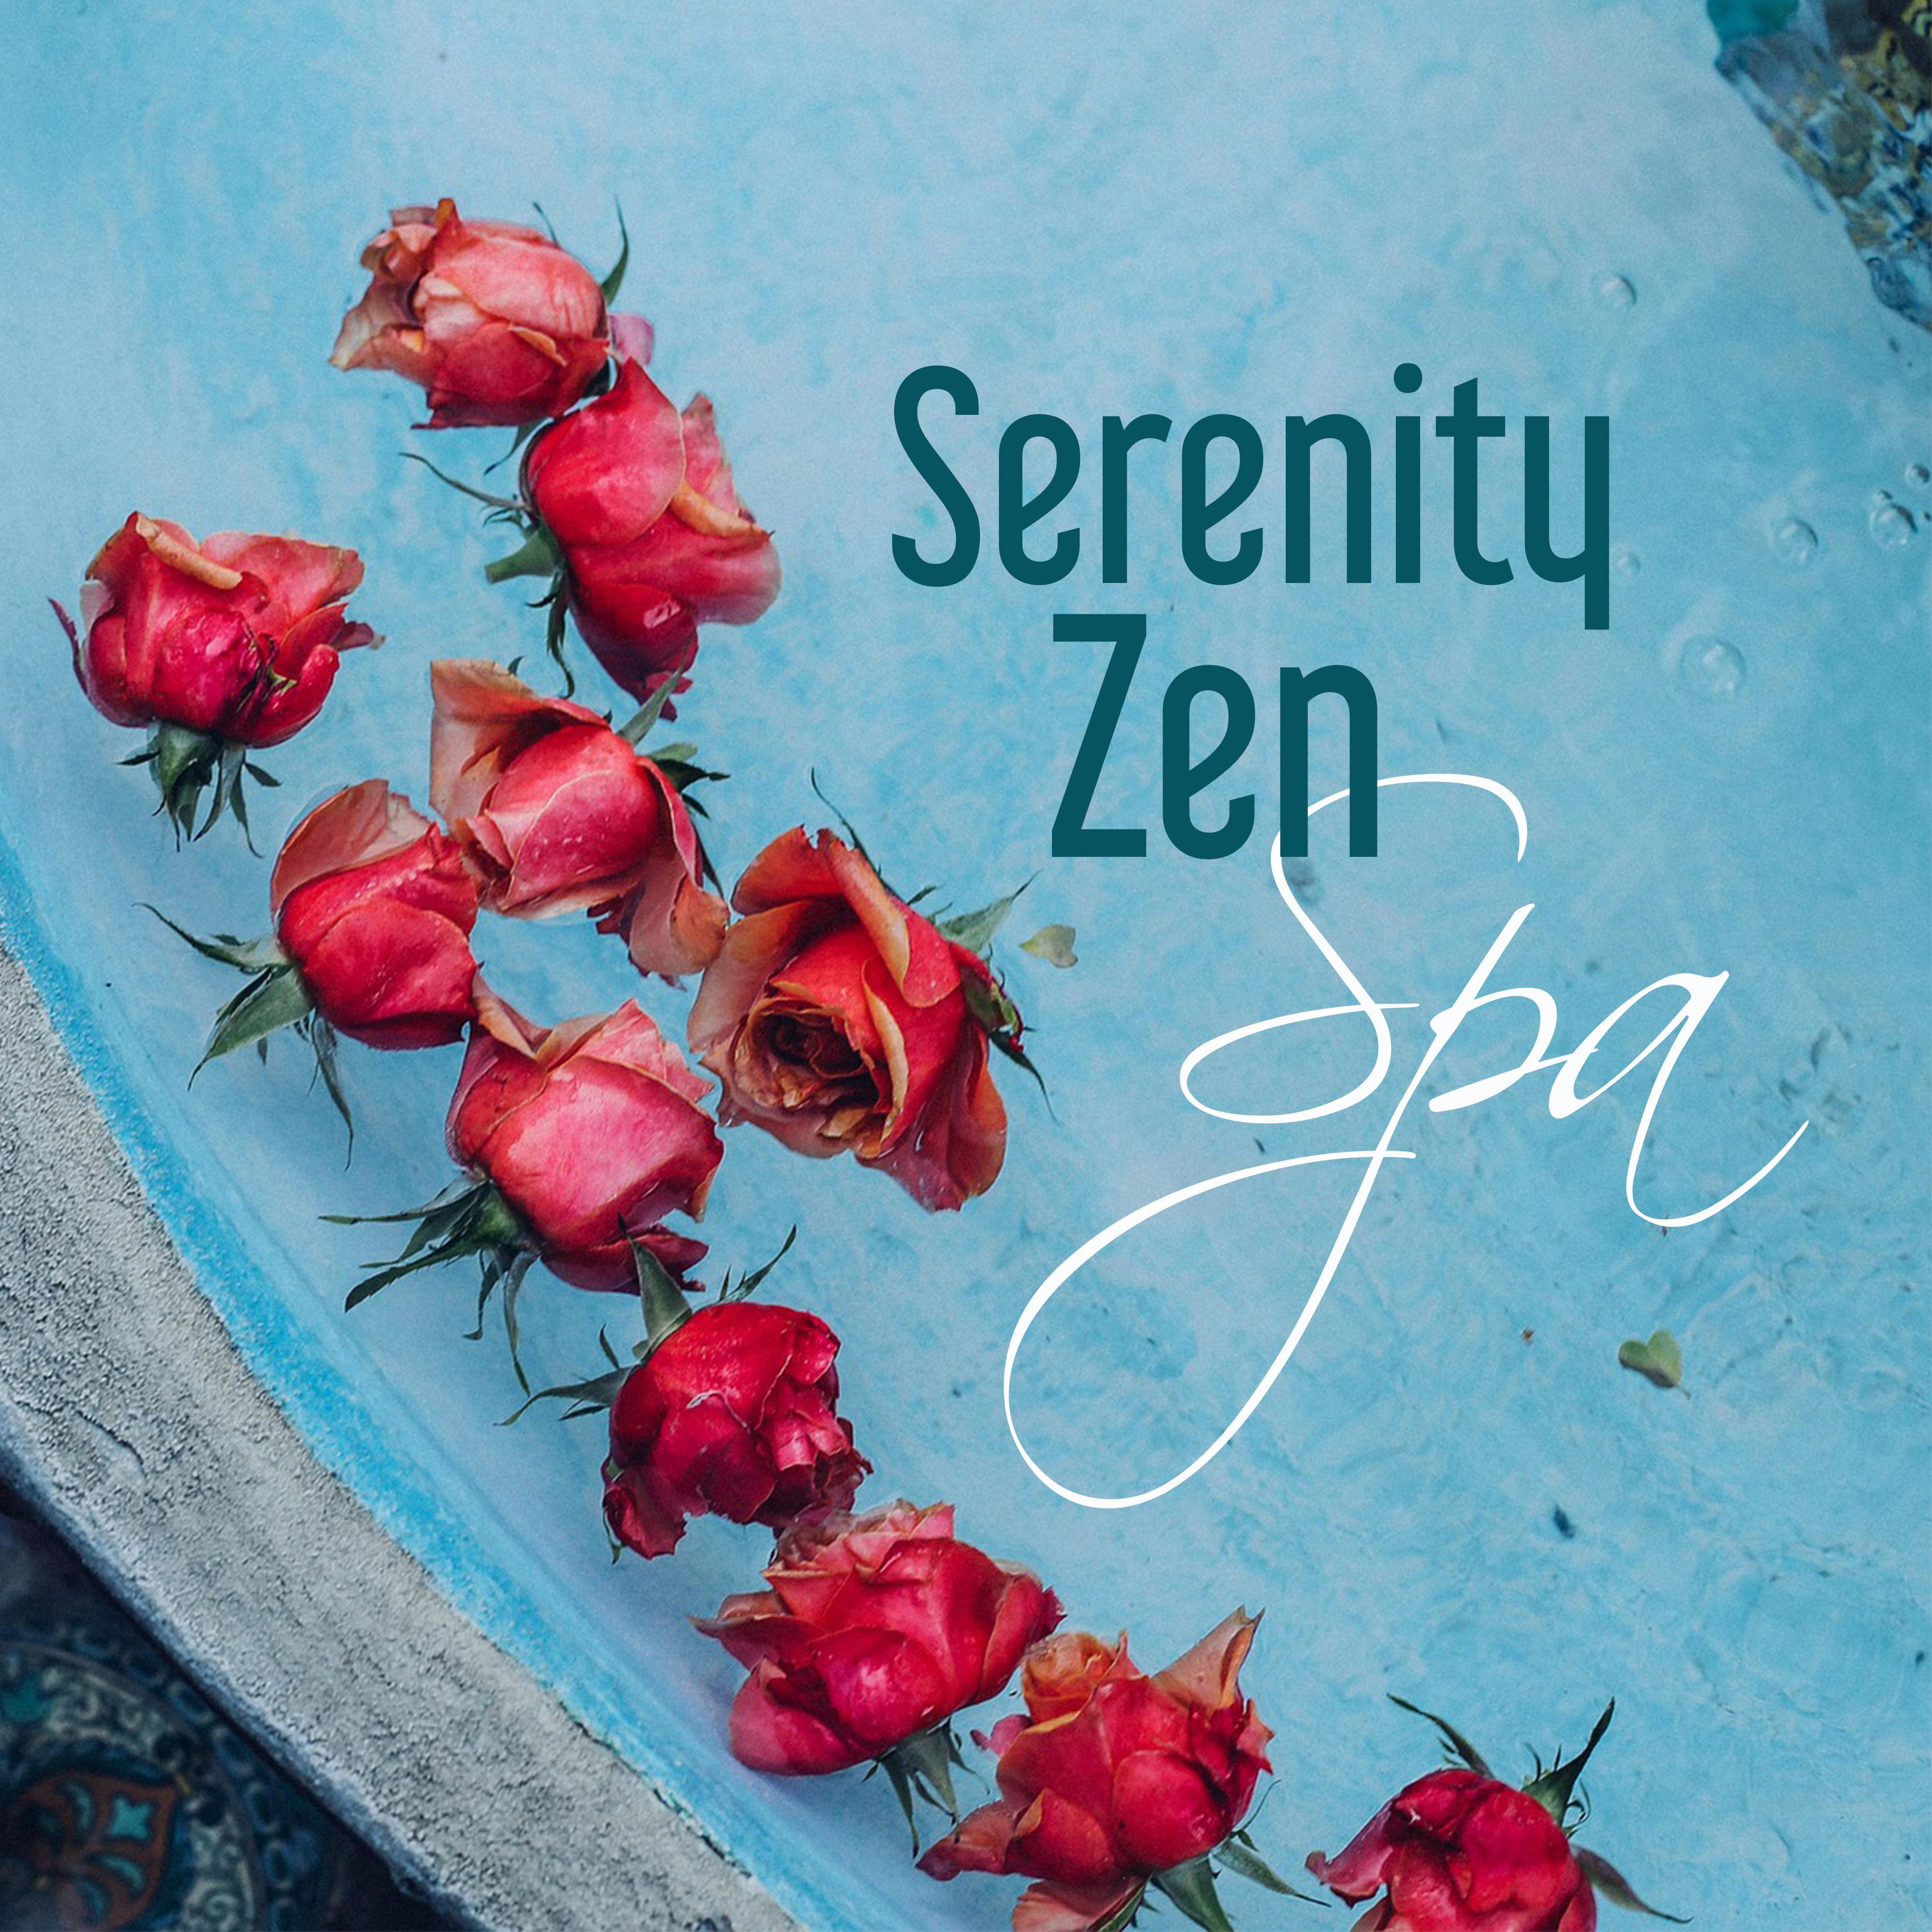 Serenity Zen Spa  Peaceful Music, Pure Massage, Wellness, Nature Sounds to Calm Down, Calmness, Relaxing Waves, Sounds of Sea, Zen